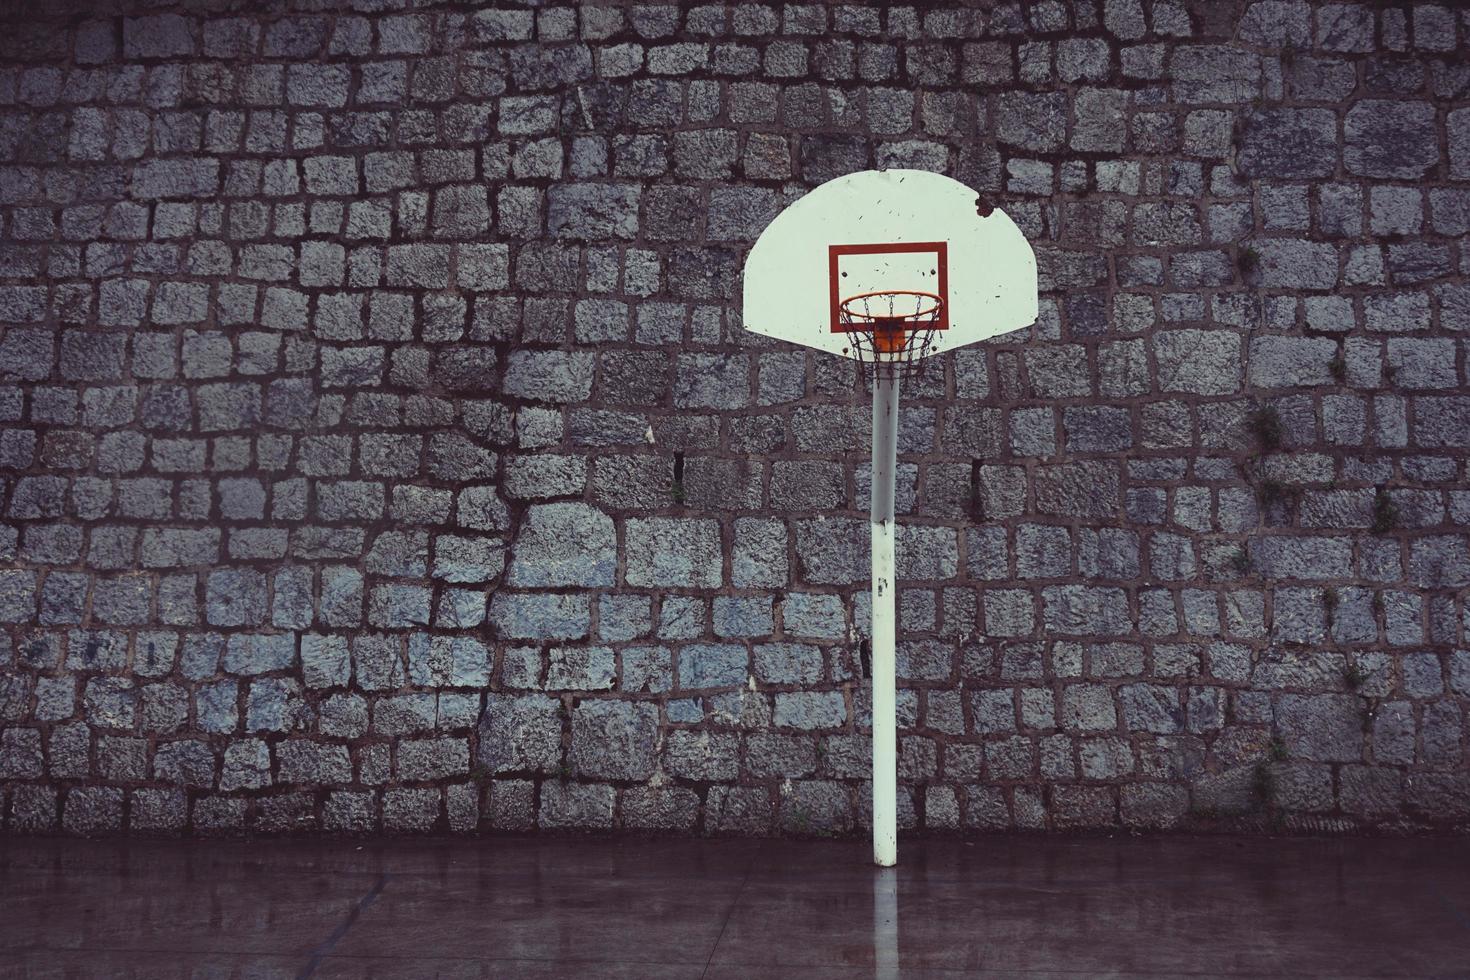 Straßenbasketballkorb Sportausrüstung foto